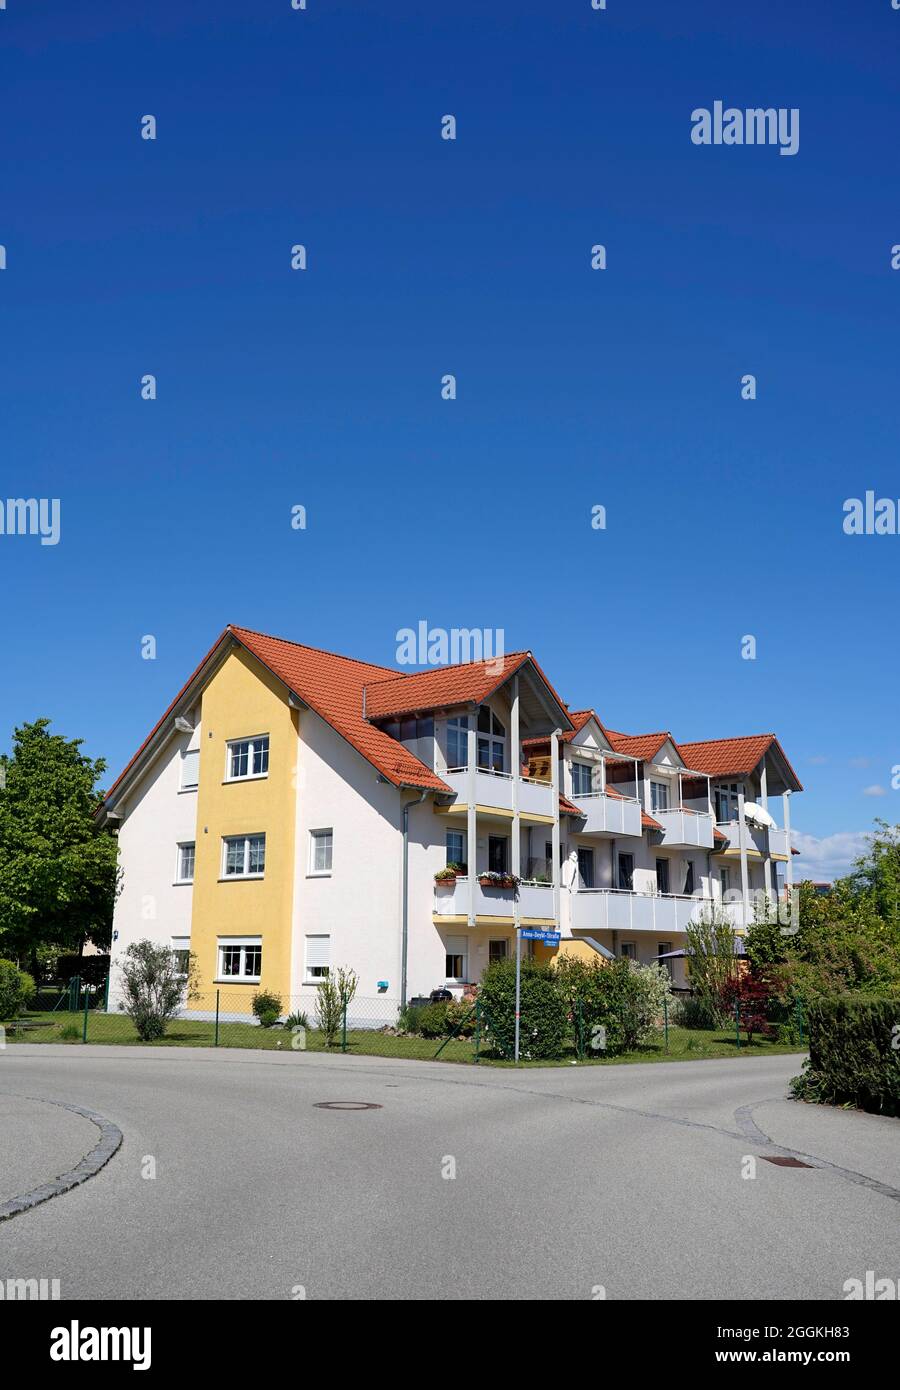 Germany, Bavaria, Upper Bavaria, Altötting district, residential complex, apartment building, dormer windows, tiled roof, balconies, garden Stock Photo